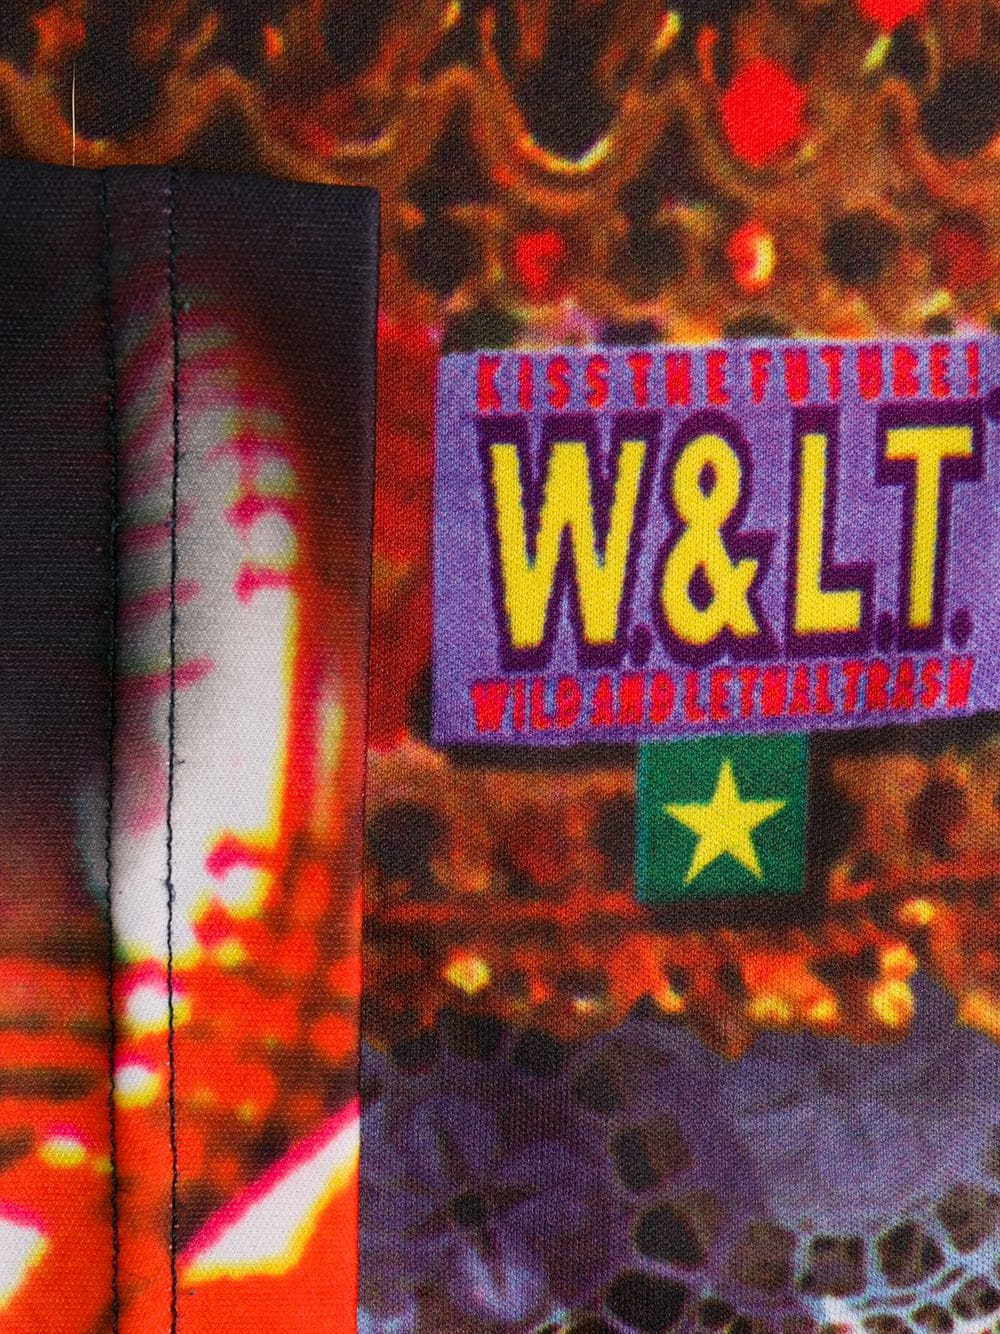 Killer / Astral Travel / 4 D-Hi-D, W.&L.T. Summer Collection 1996, By  Official Walter Van Beirendonck fanpage